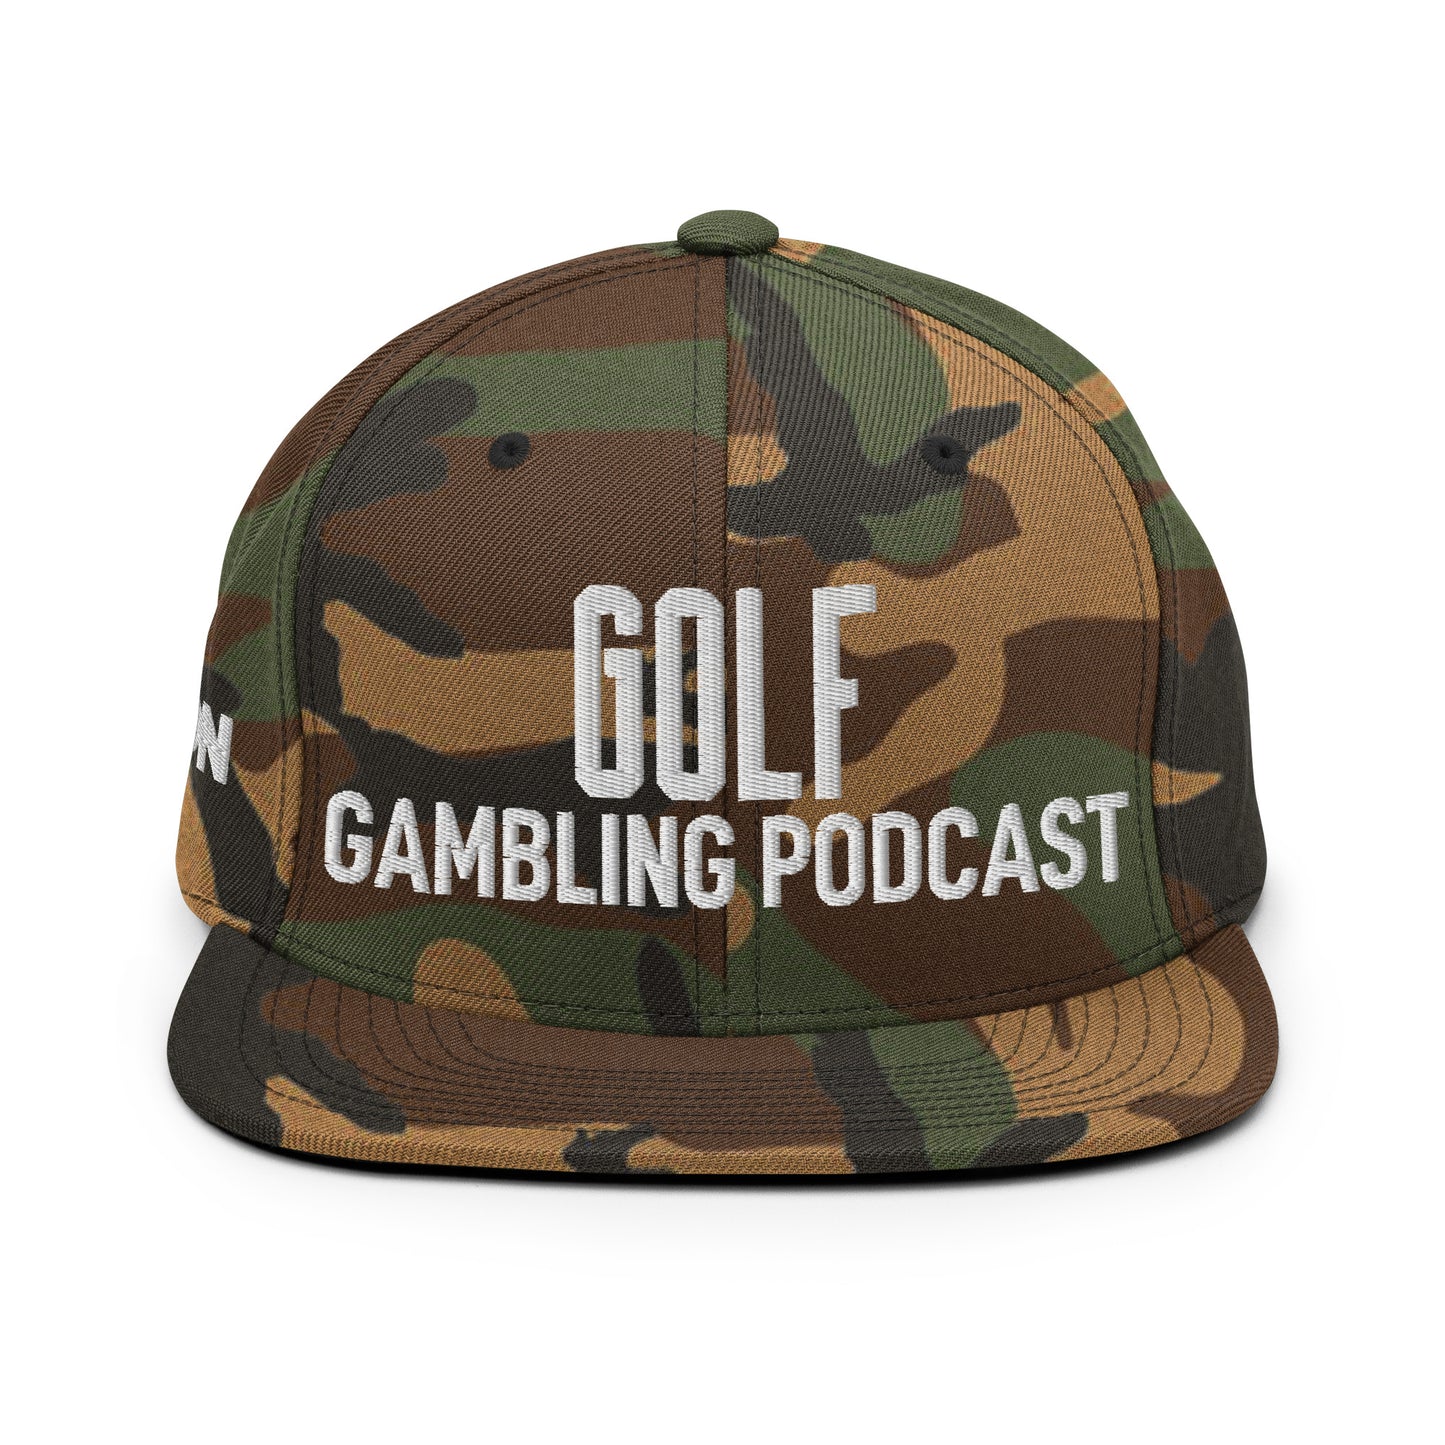 Golf Gambling Podcast - Snapback Hat (White Logo)